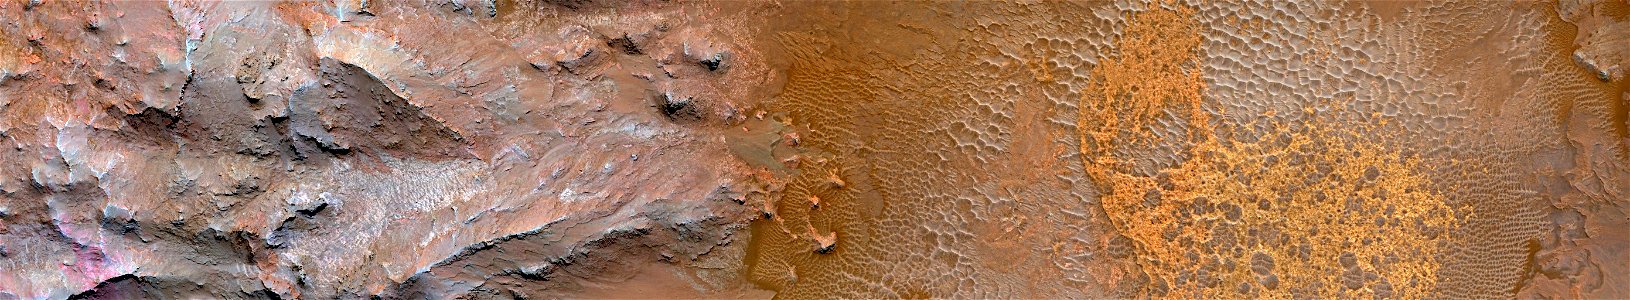 Mars - Ripples and Transverse Aeolian Ridges in Elorza Crater photo